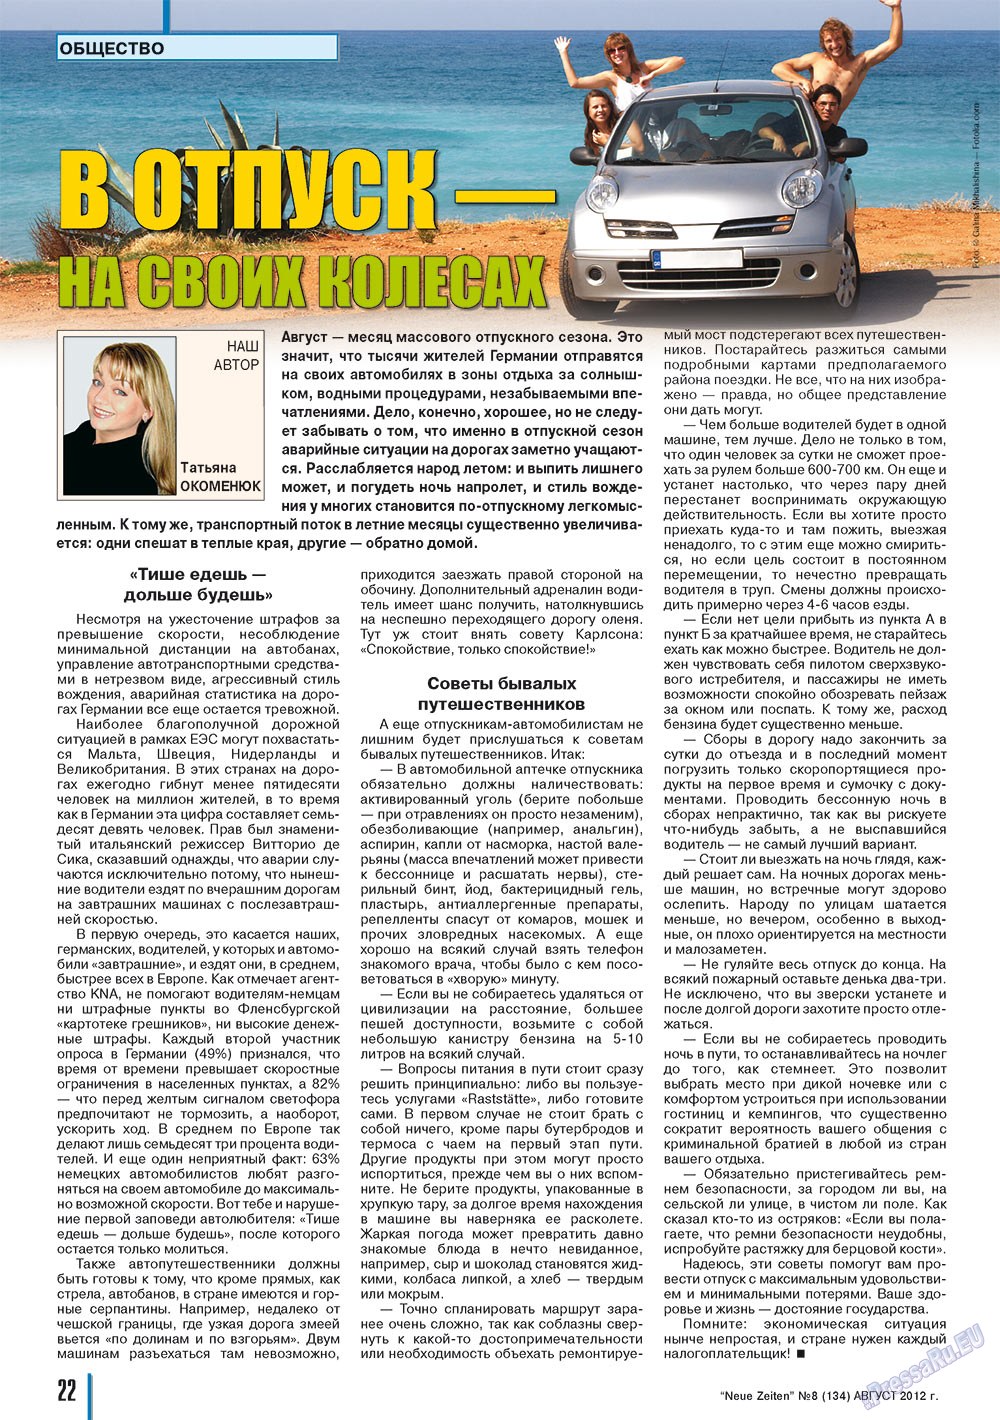 Neue Zeiten (журнал). 2012 год, номер 8, стр. 22